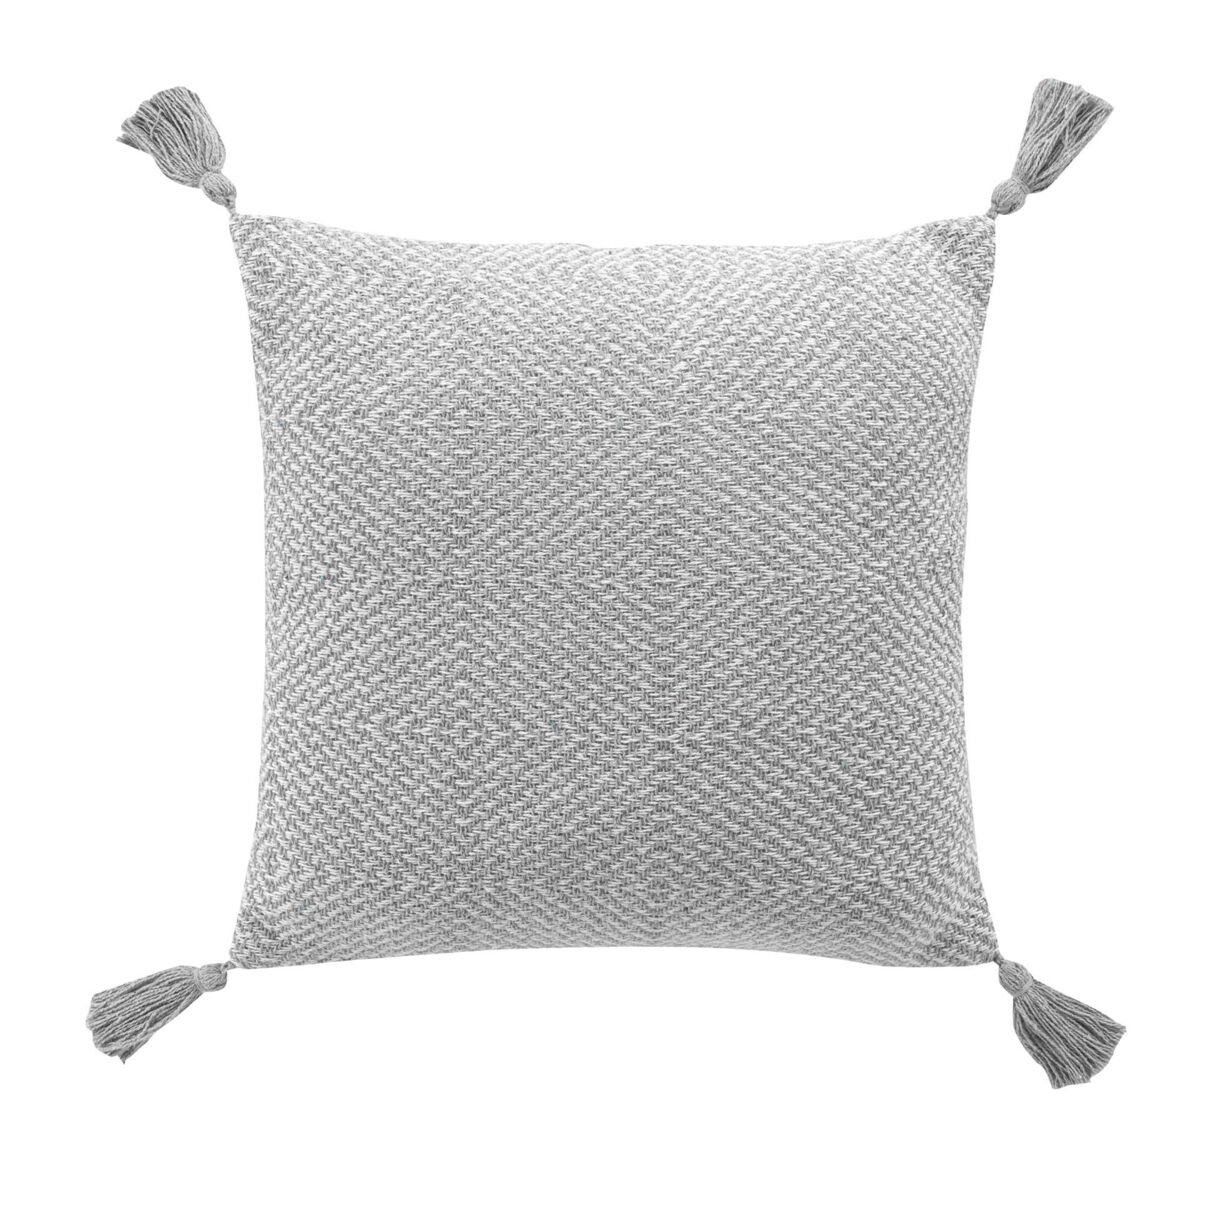 Cuscino quadrato cotone pon pon (40 x 40 cm) Louisette Grigio